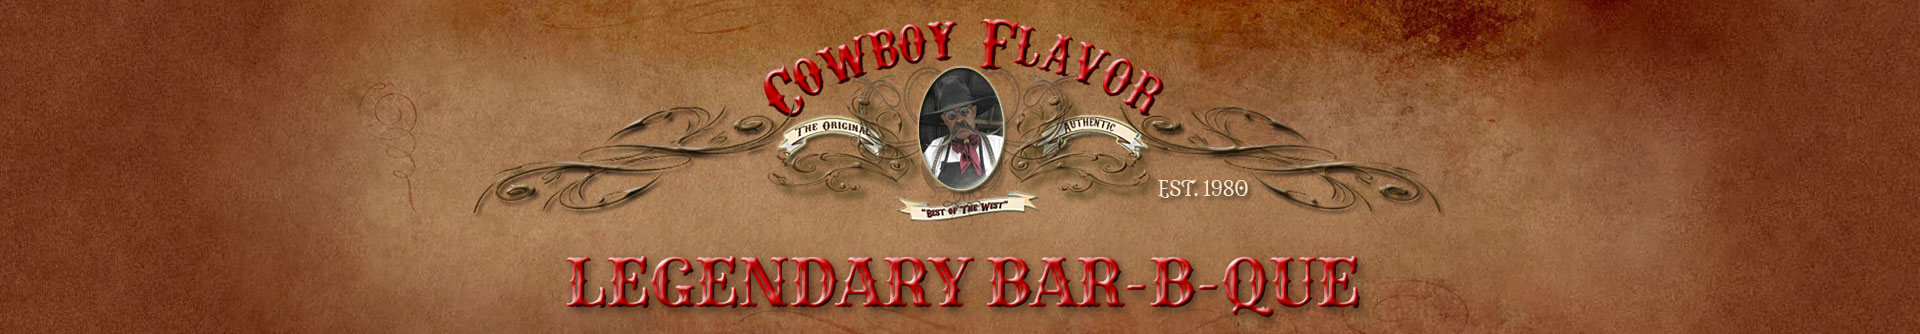 Cowboy Flavor Legendary Bar-B-Que logo